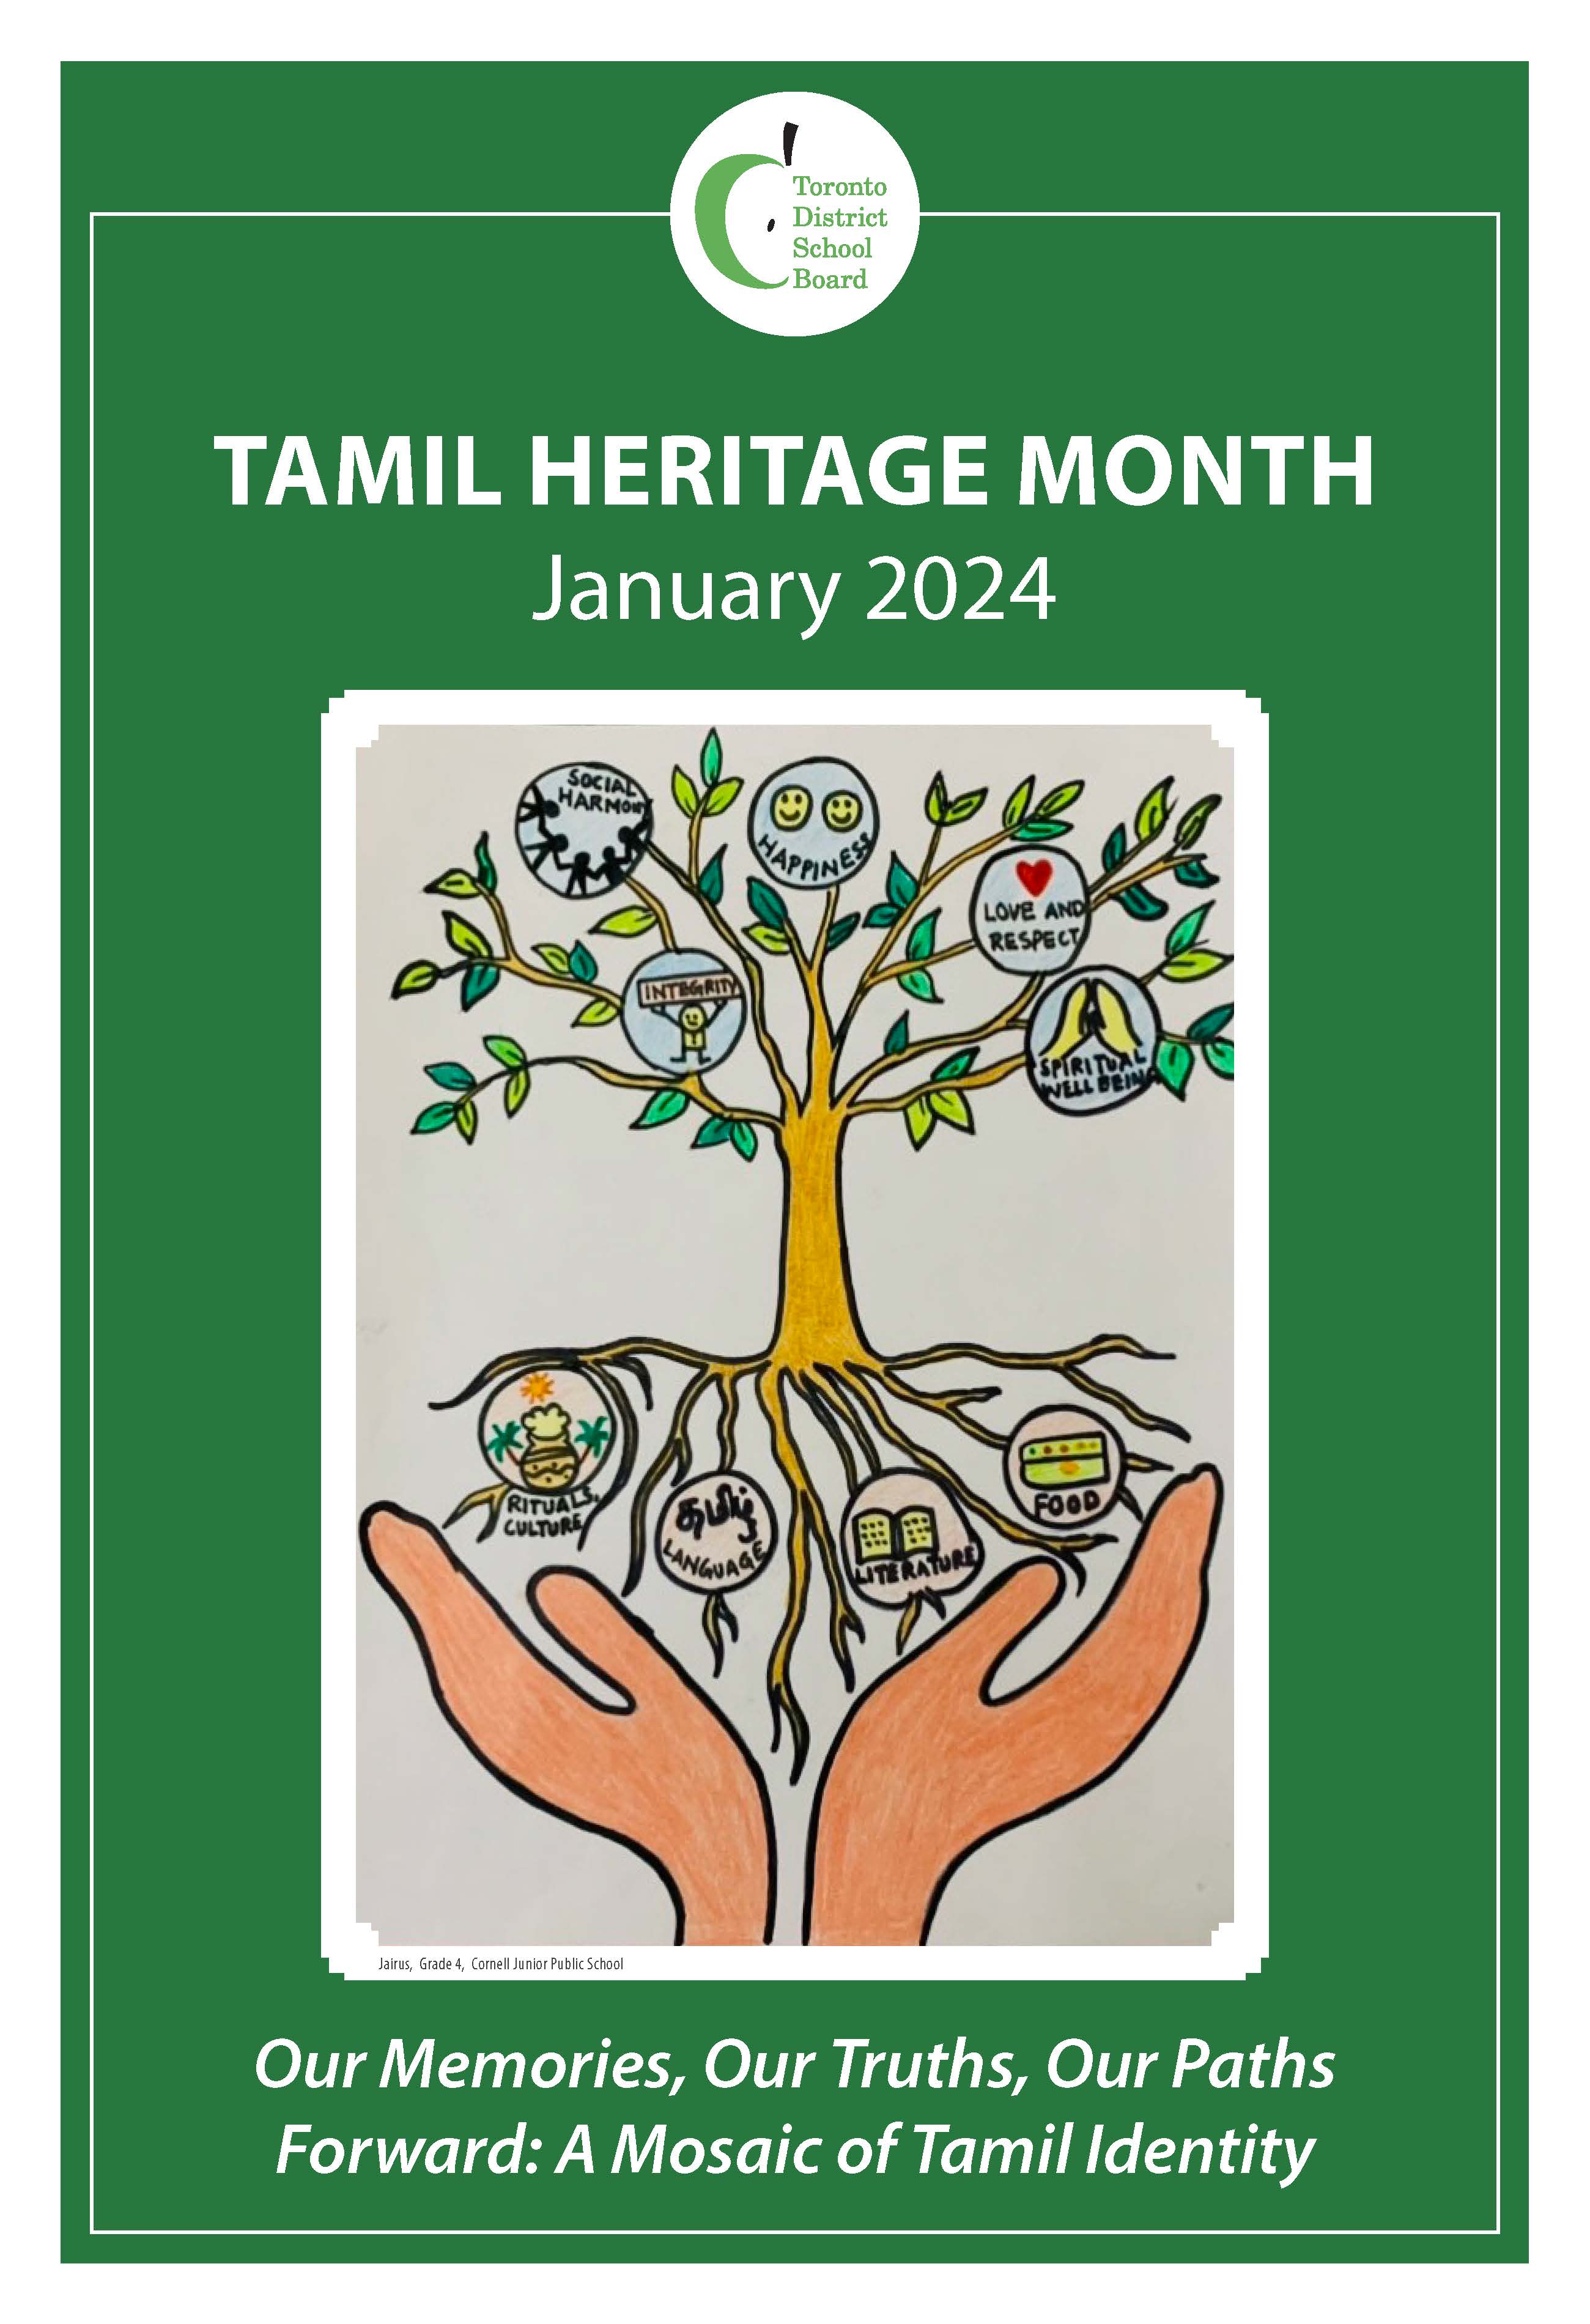 Tamil Heritage Month post 2